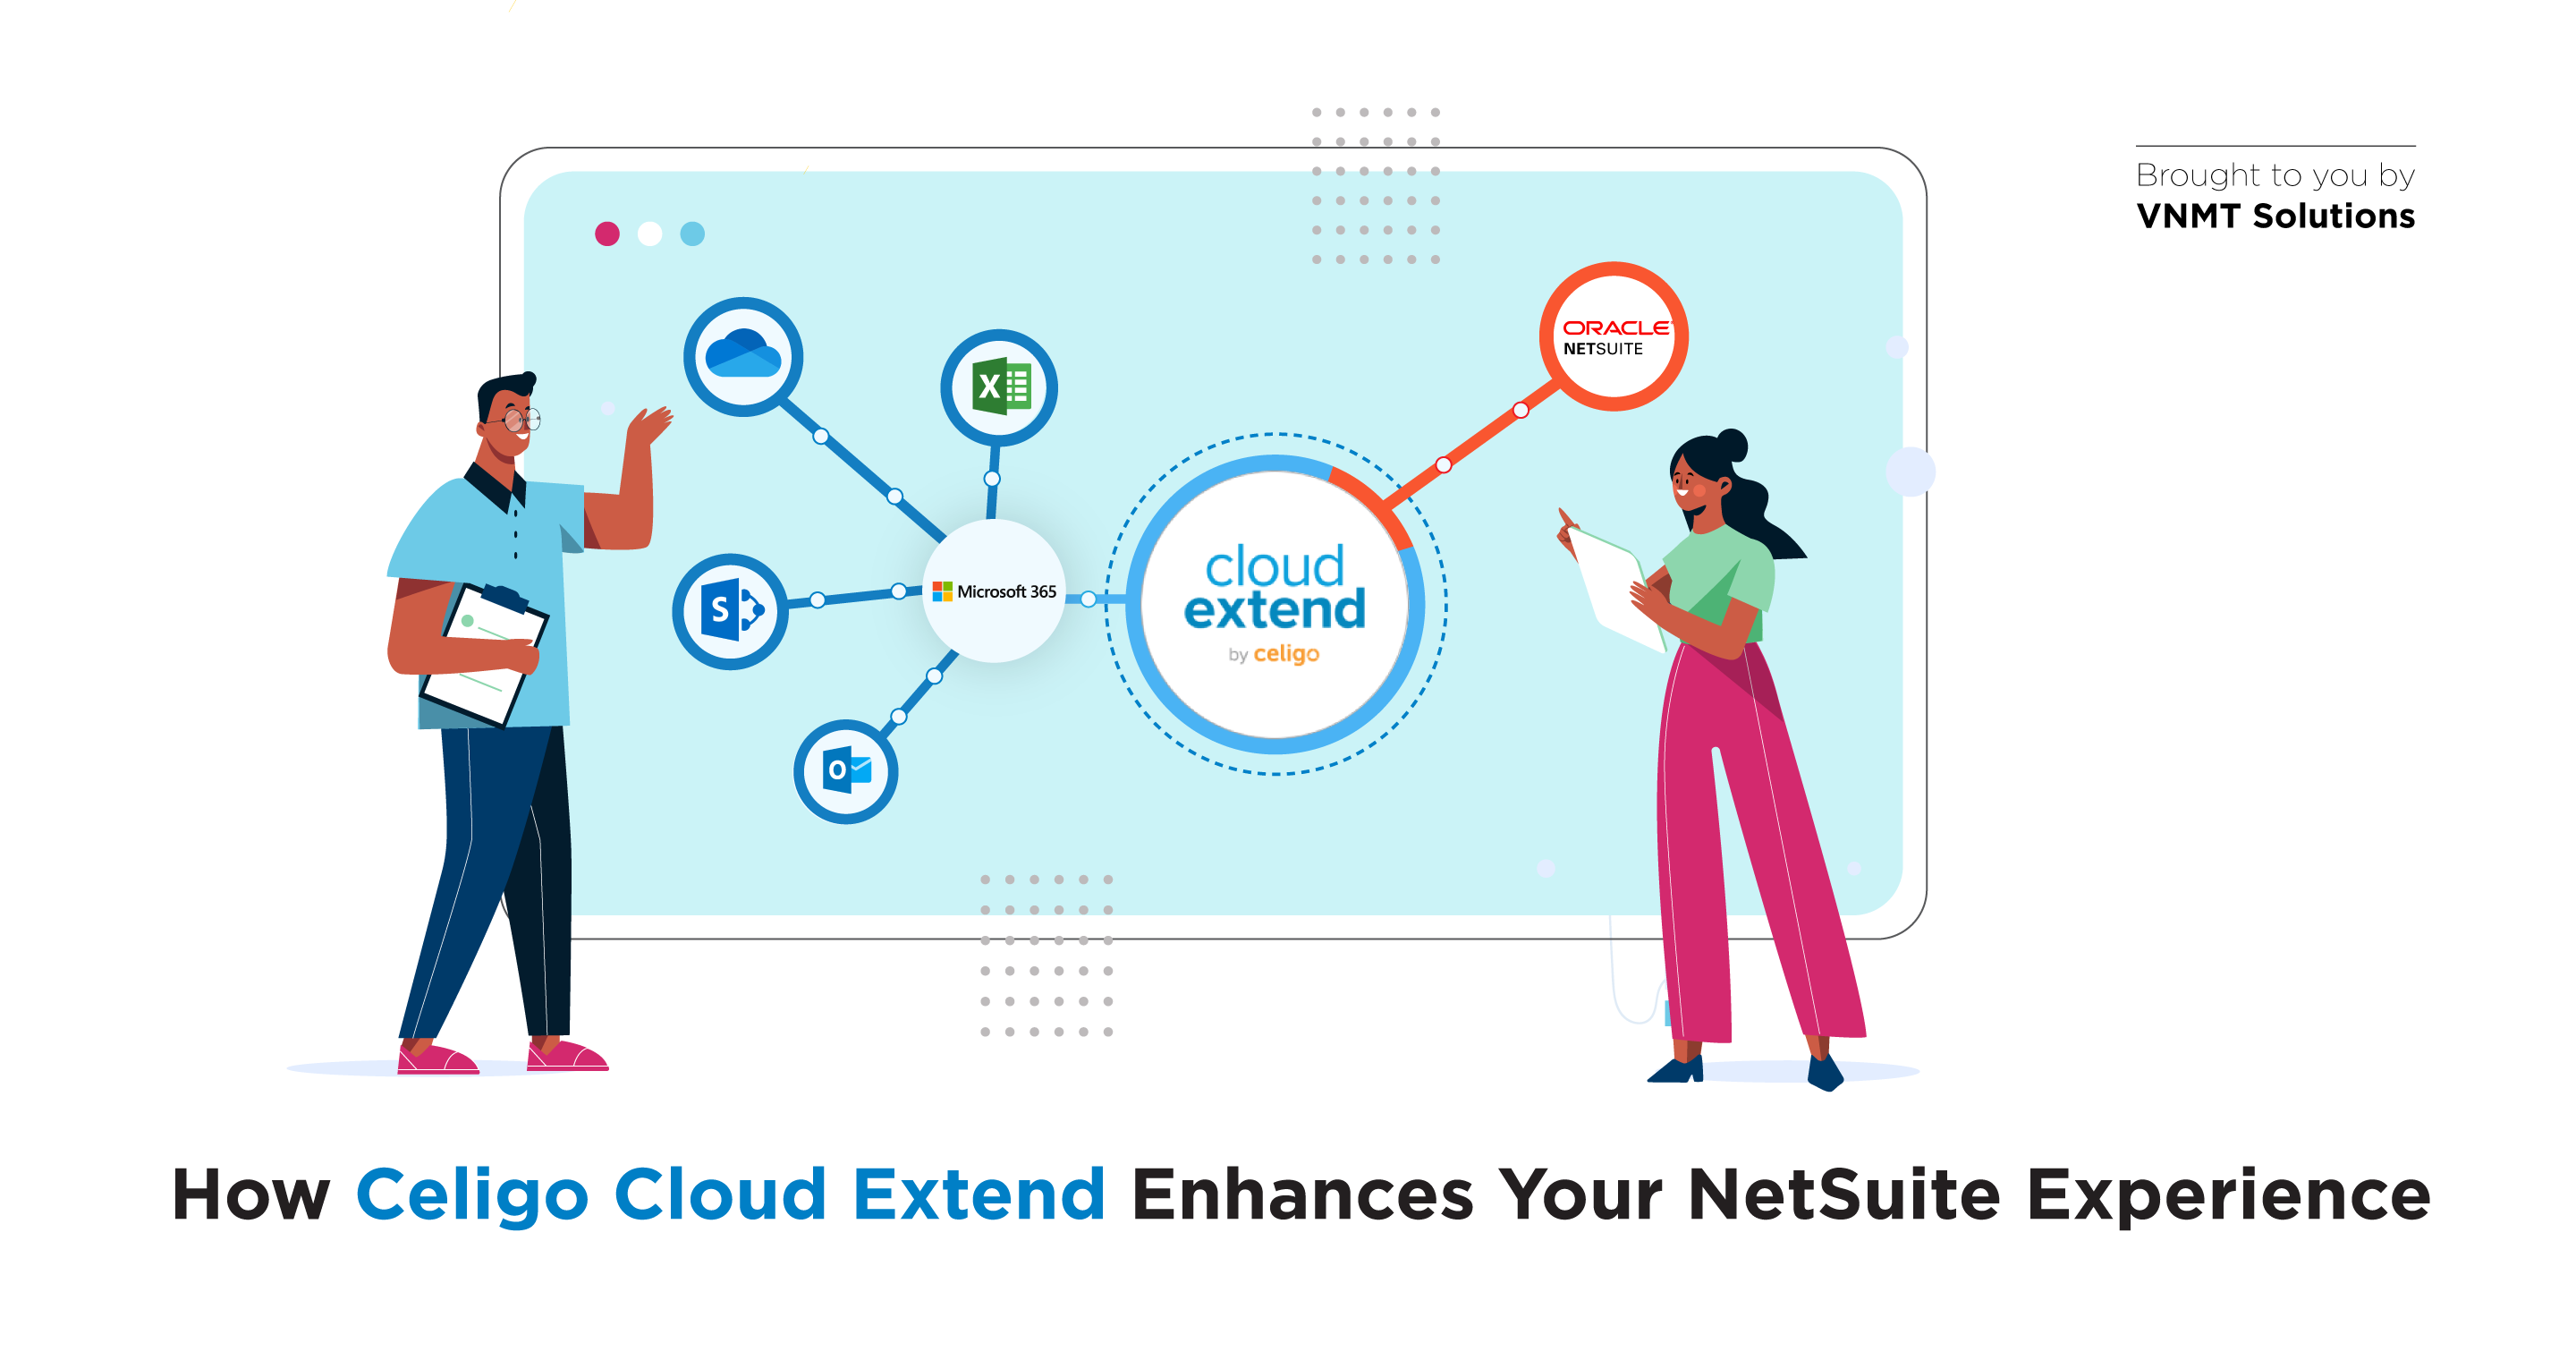 How Does Celigo Cloud Extend Enhance Your NetSuite Experience